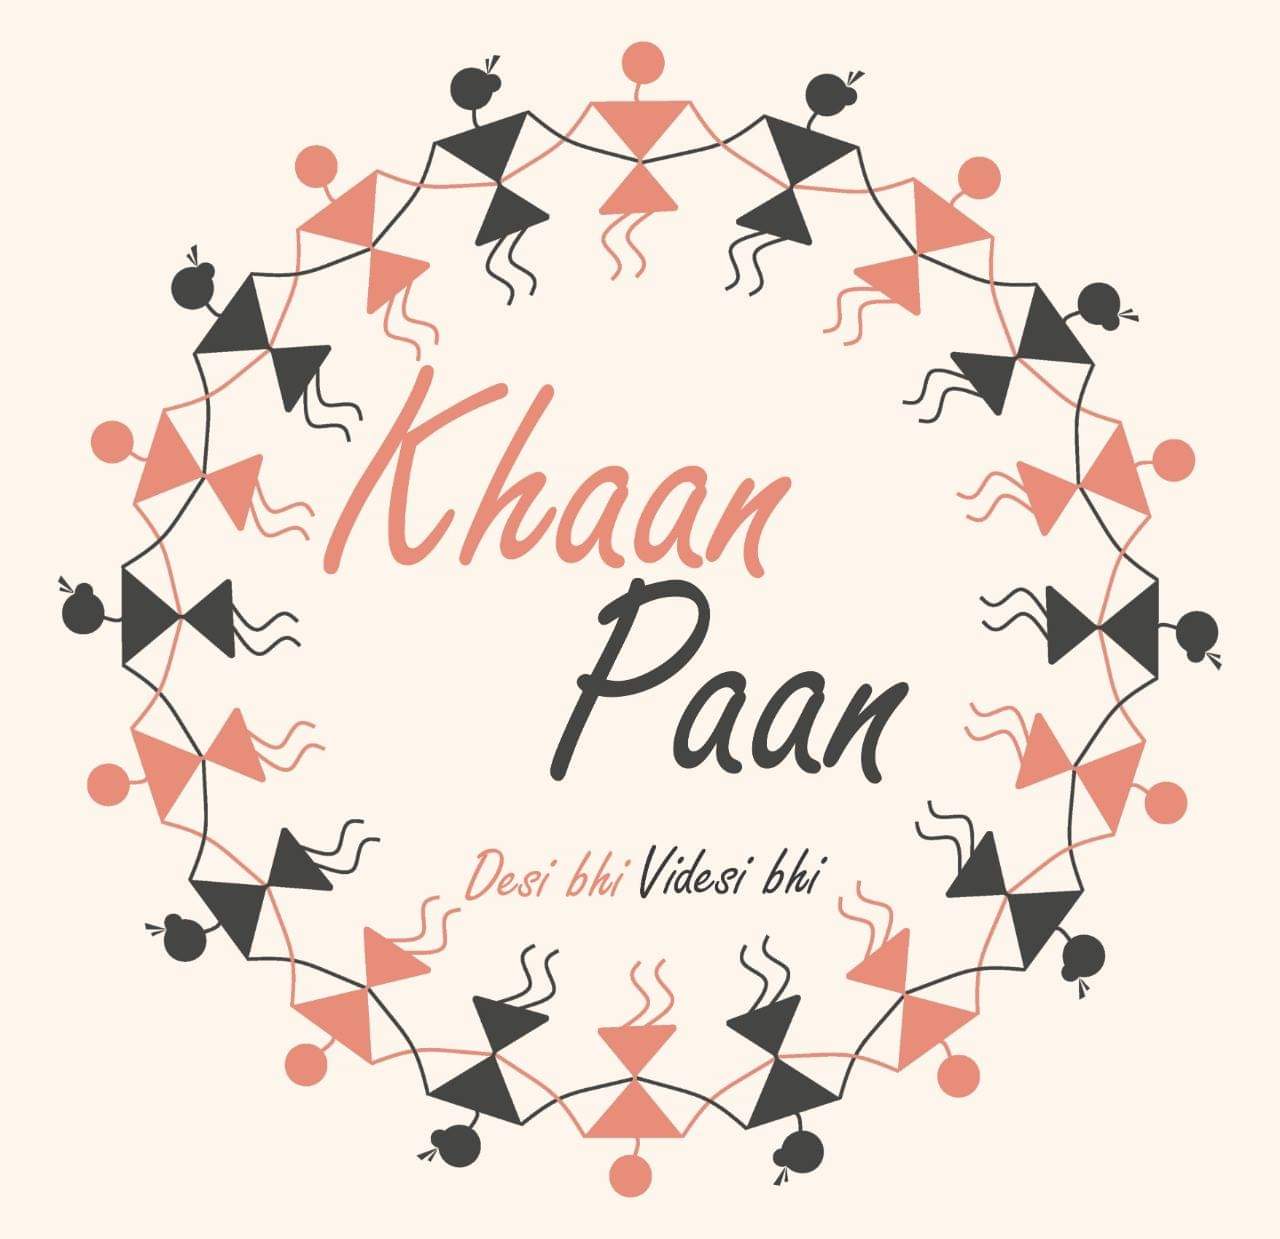 Khaan Paan - Sector-D online delivery in Noida, Delhi, NCR,
                    Gurgaon